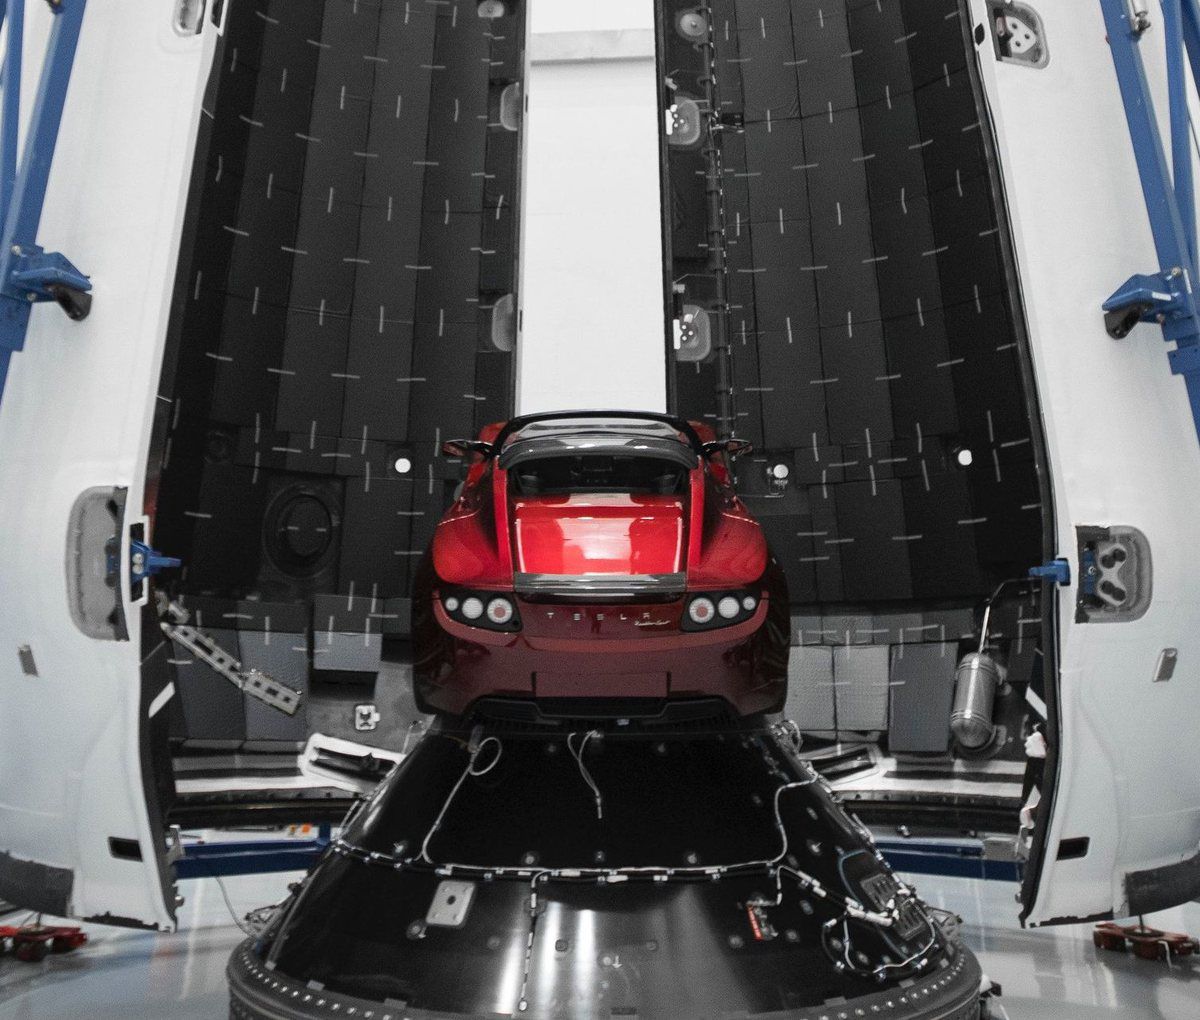 SpaceX - Tesla - Falcon Heavy - Red roaster - Elon Musk - Charge utile - Payload - Starman - David Bowie - Voiture - Bagnole dans l'espace - Car